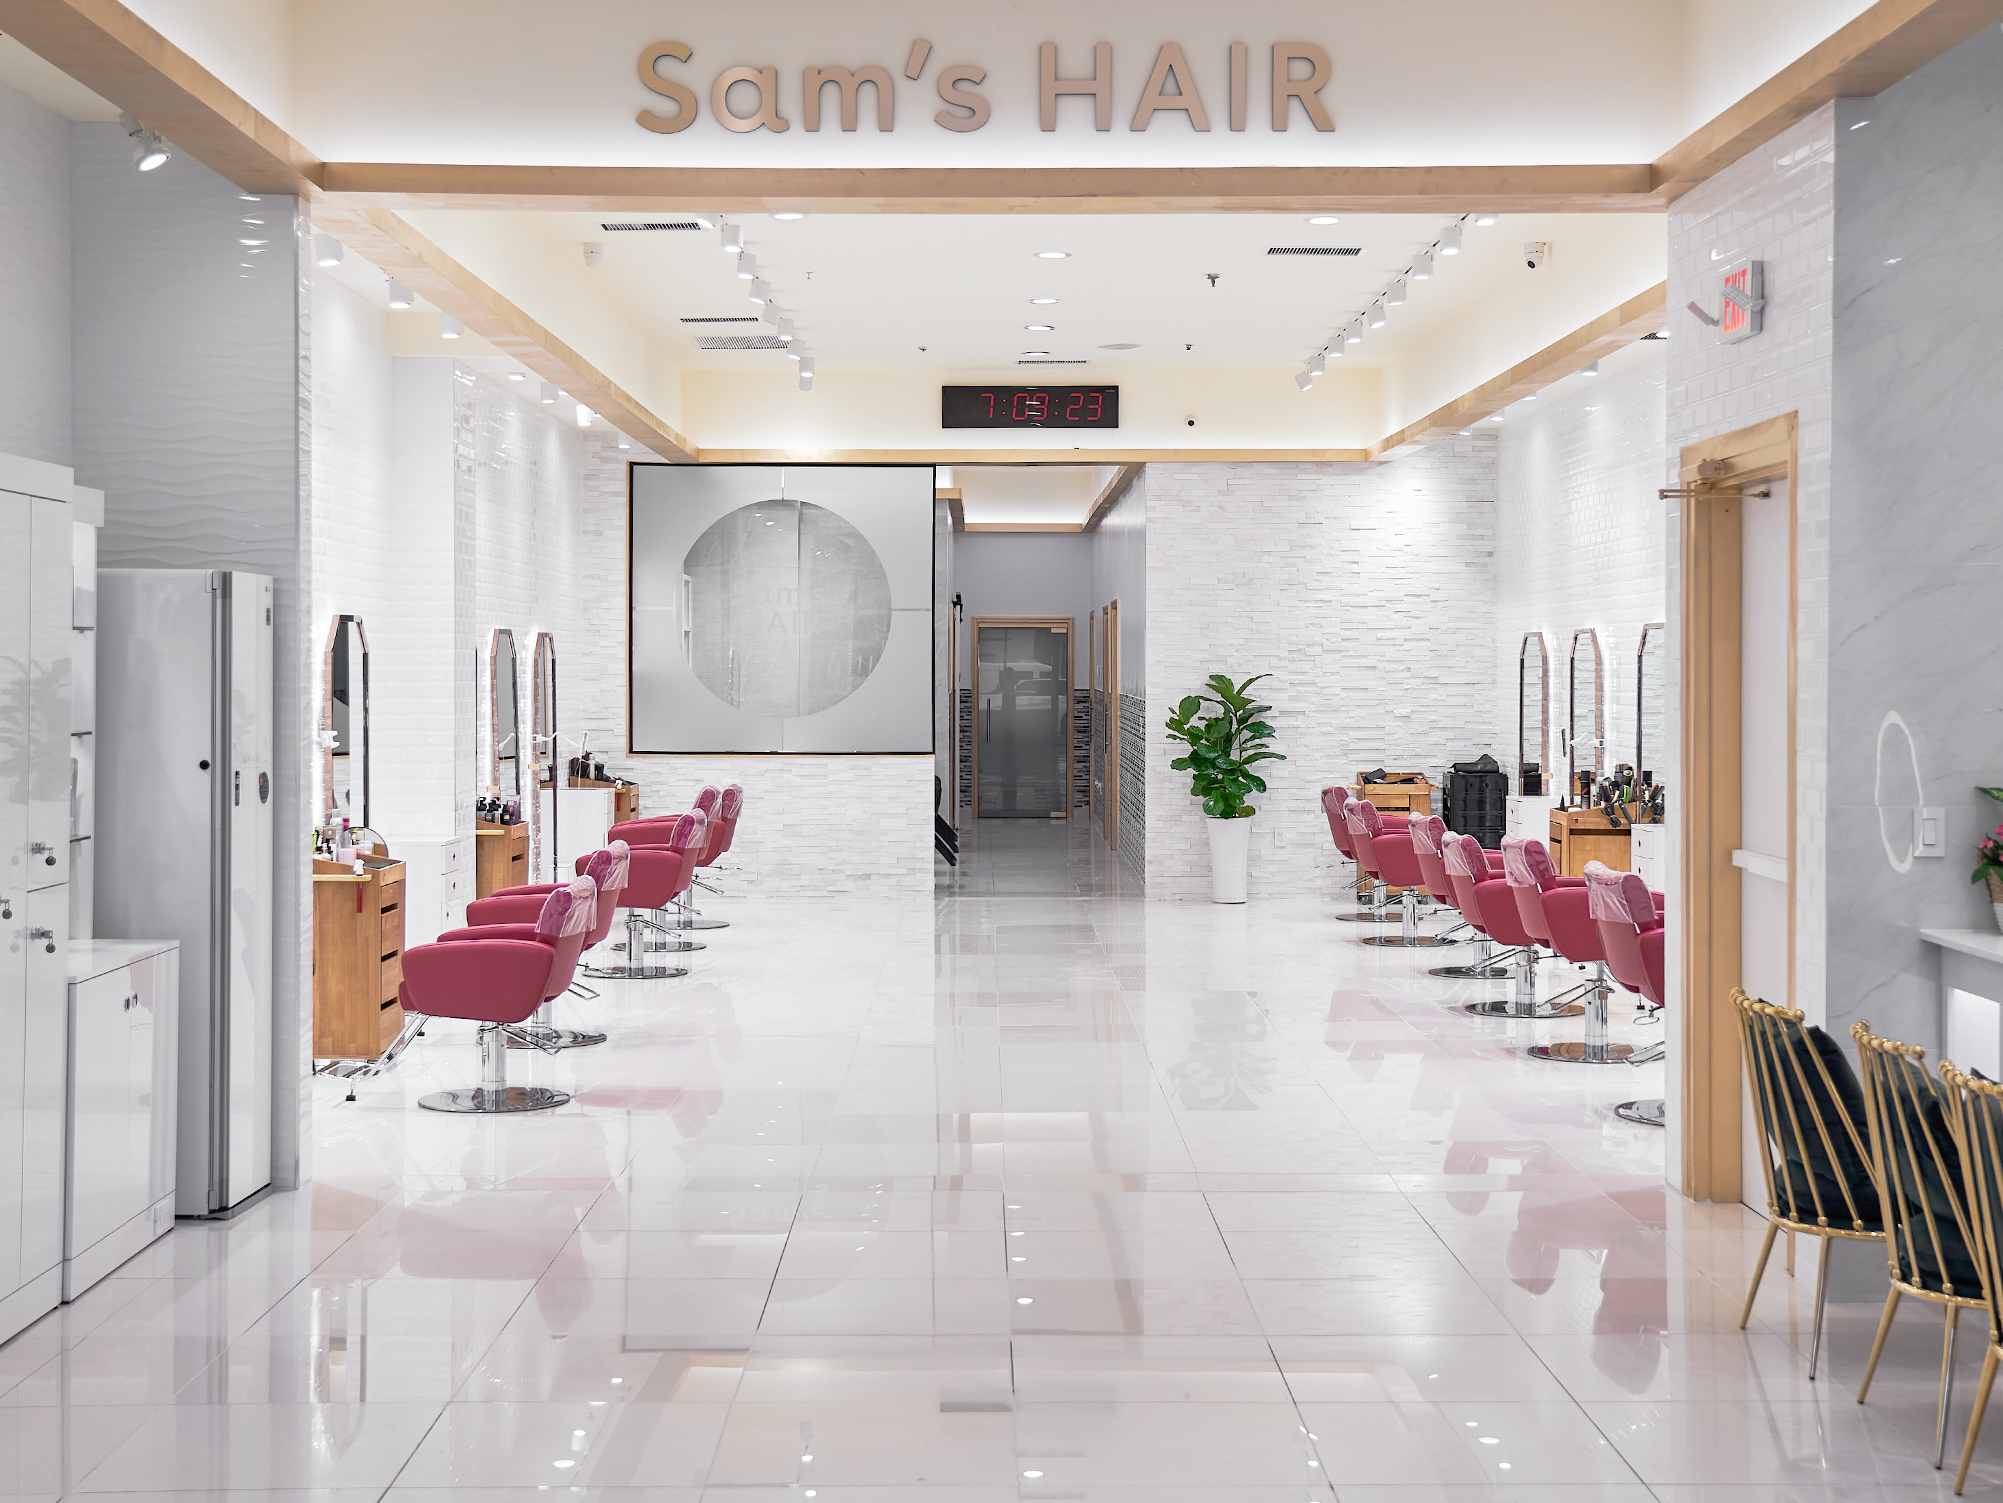 Sam's HAIR | Fort Lee